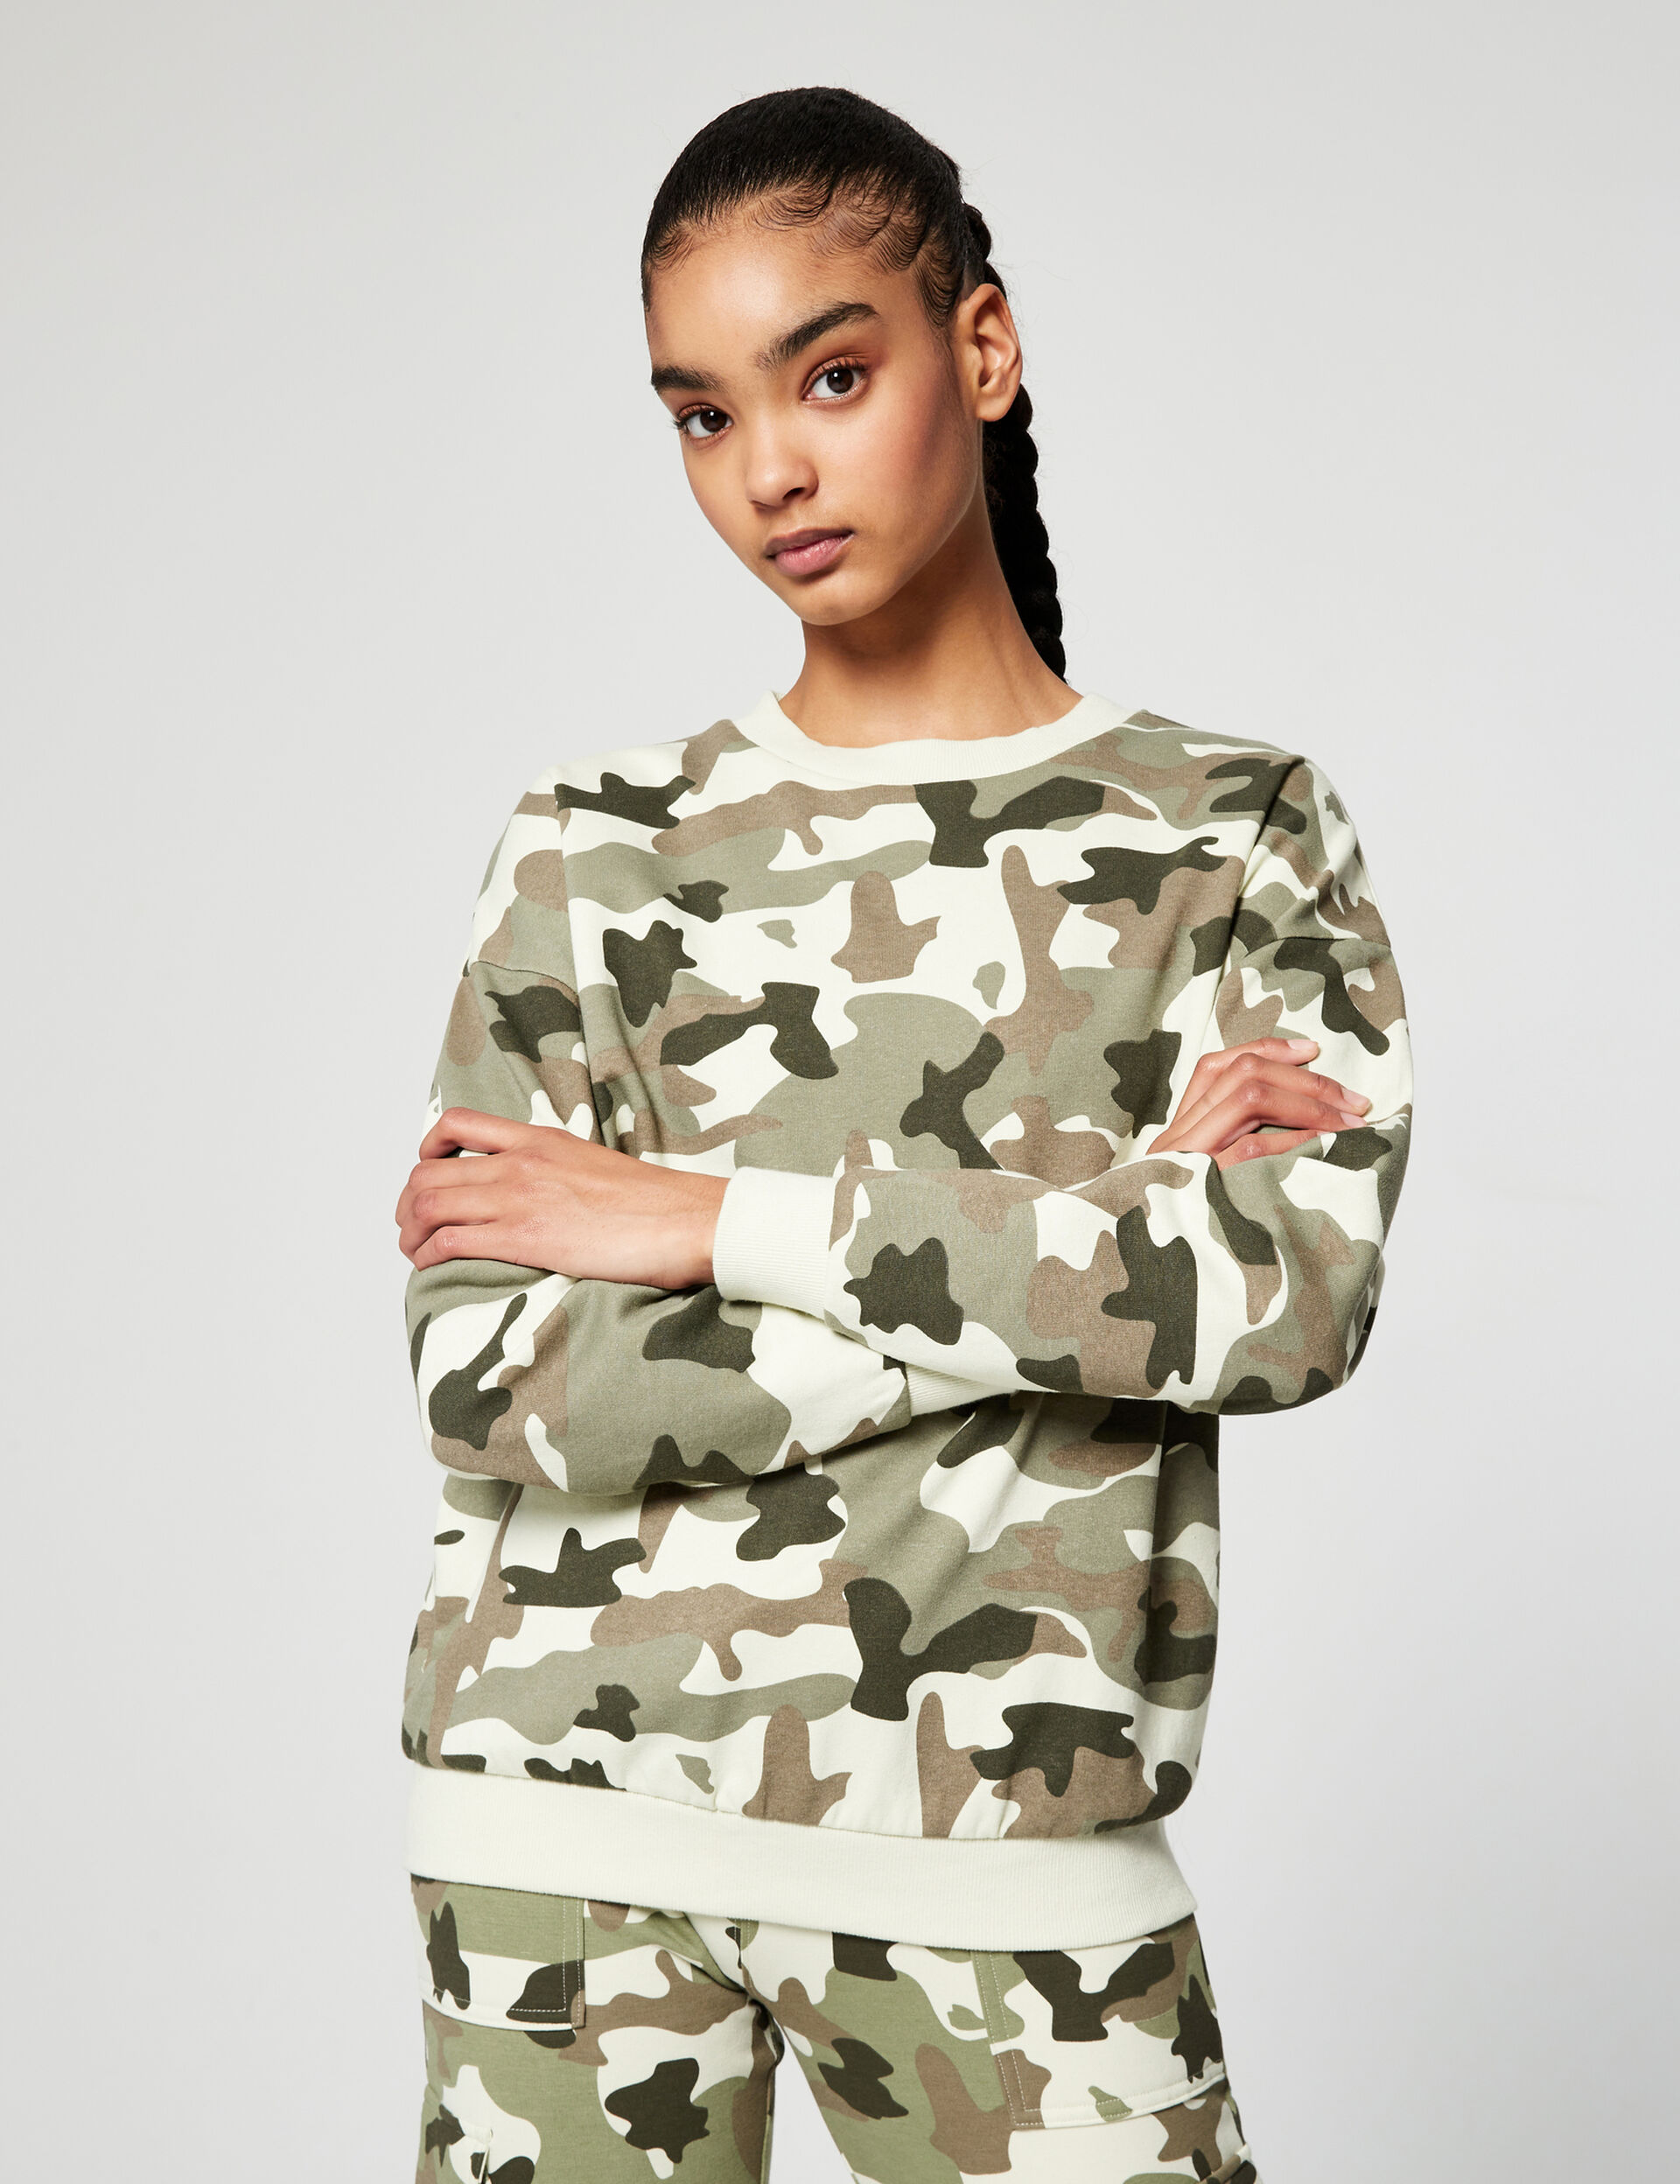 Basic camouflage sweatshirt